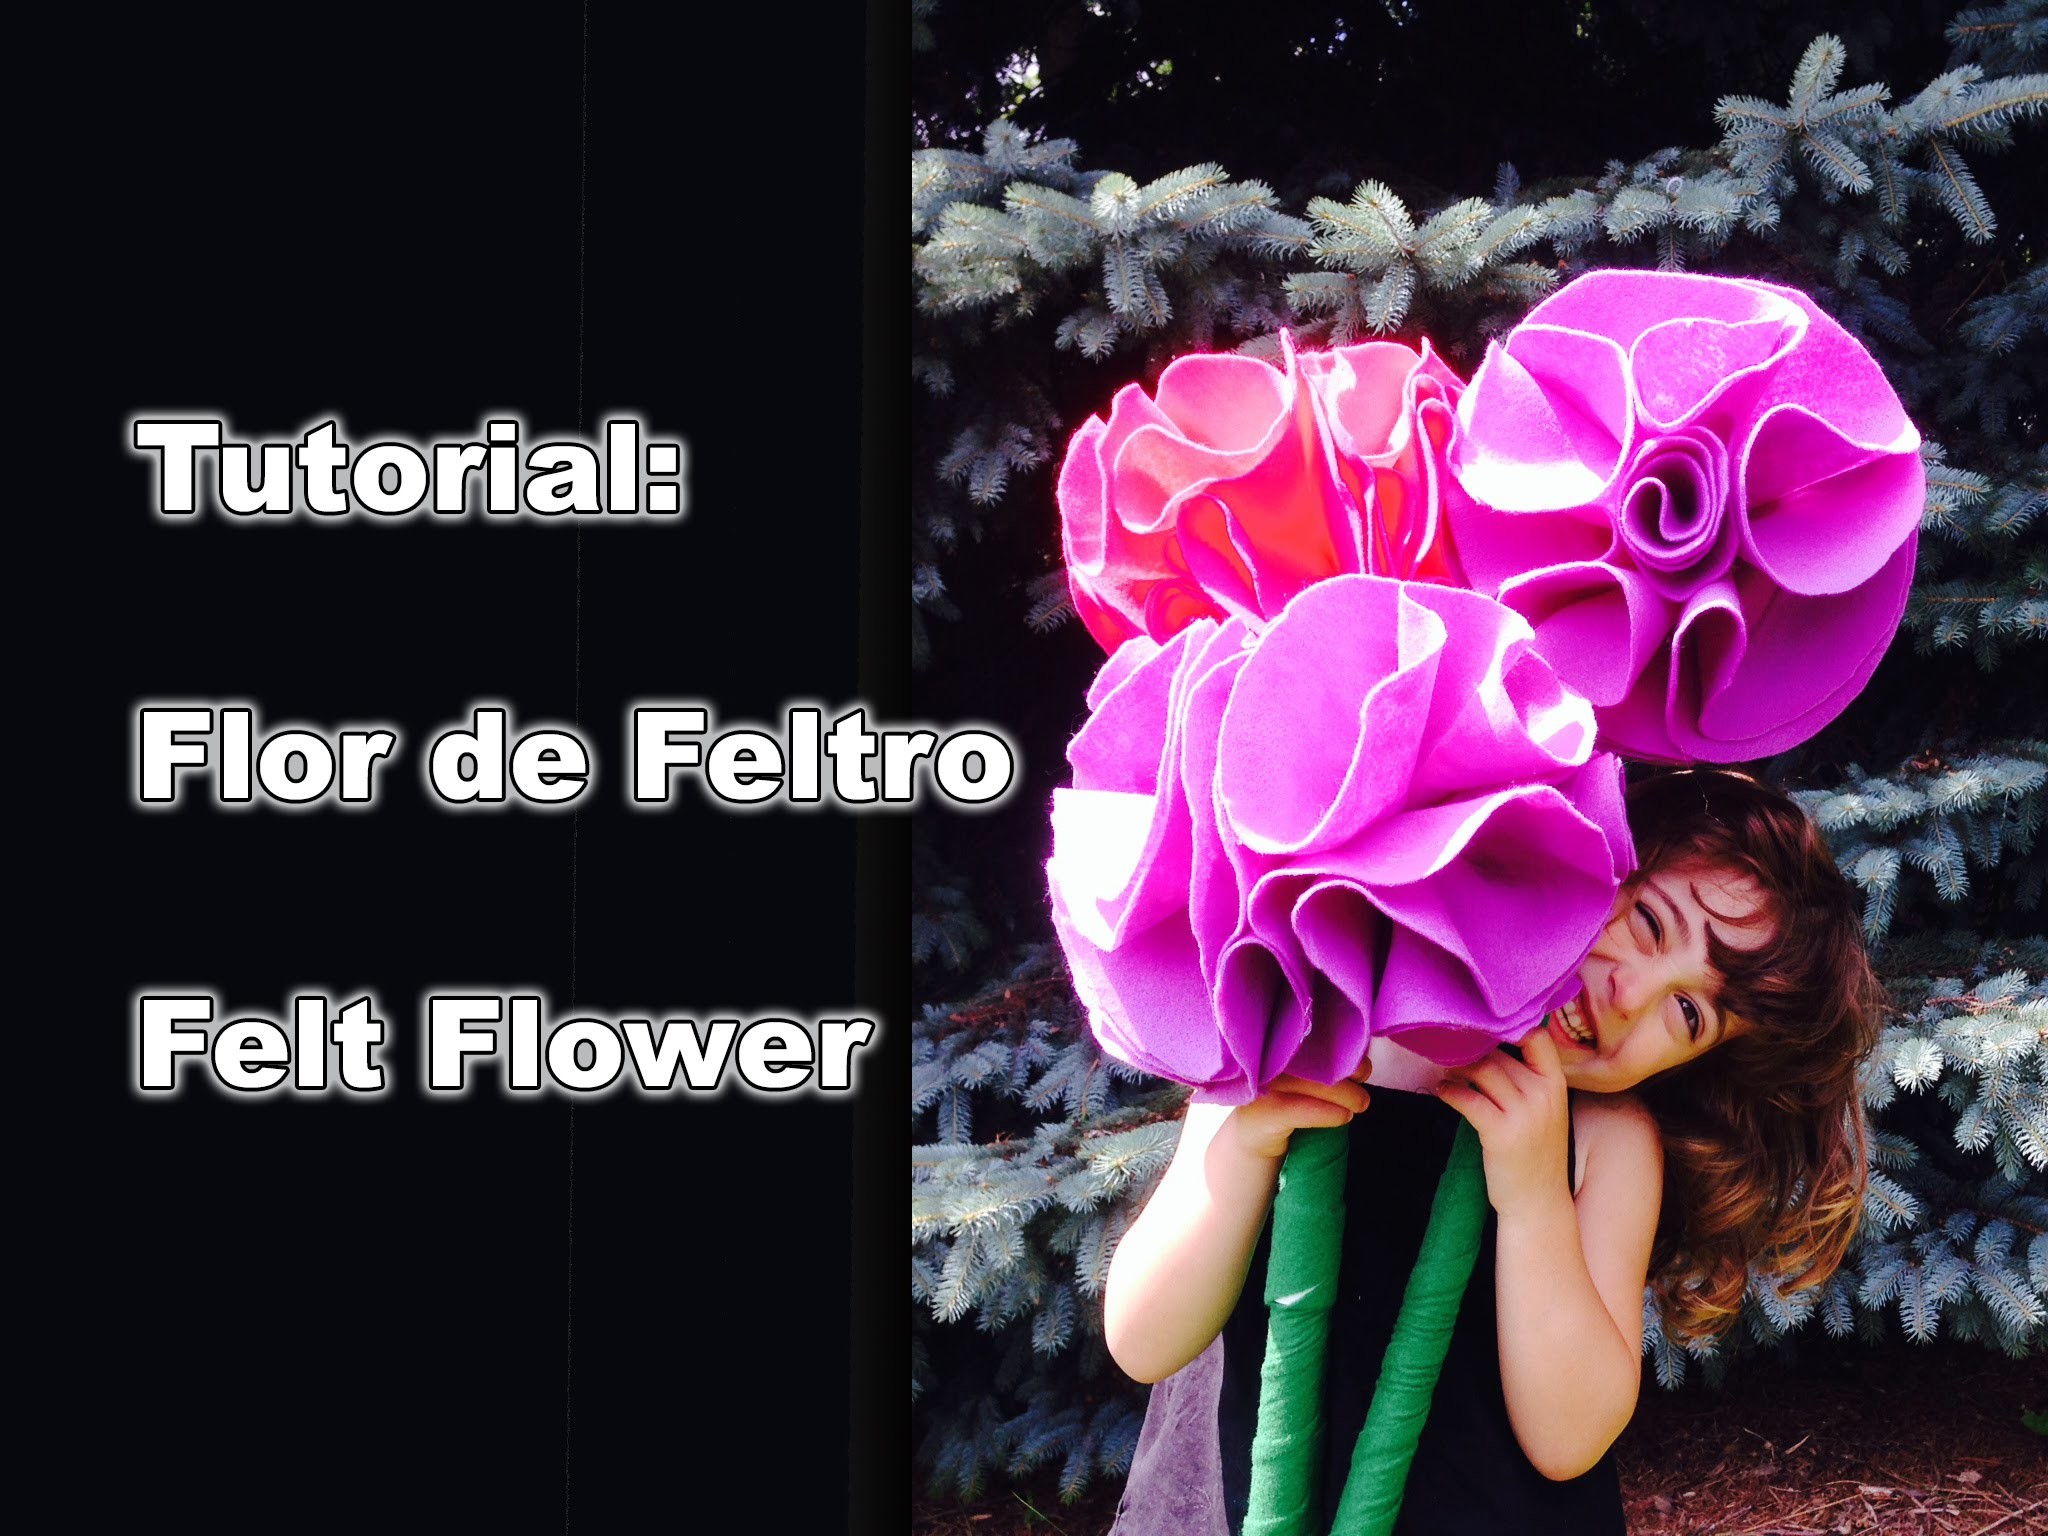 Tutorial: Flor de Feltro - Felt Flower